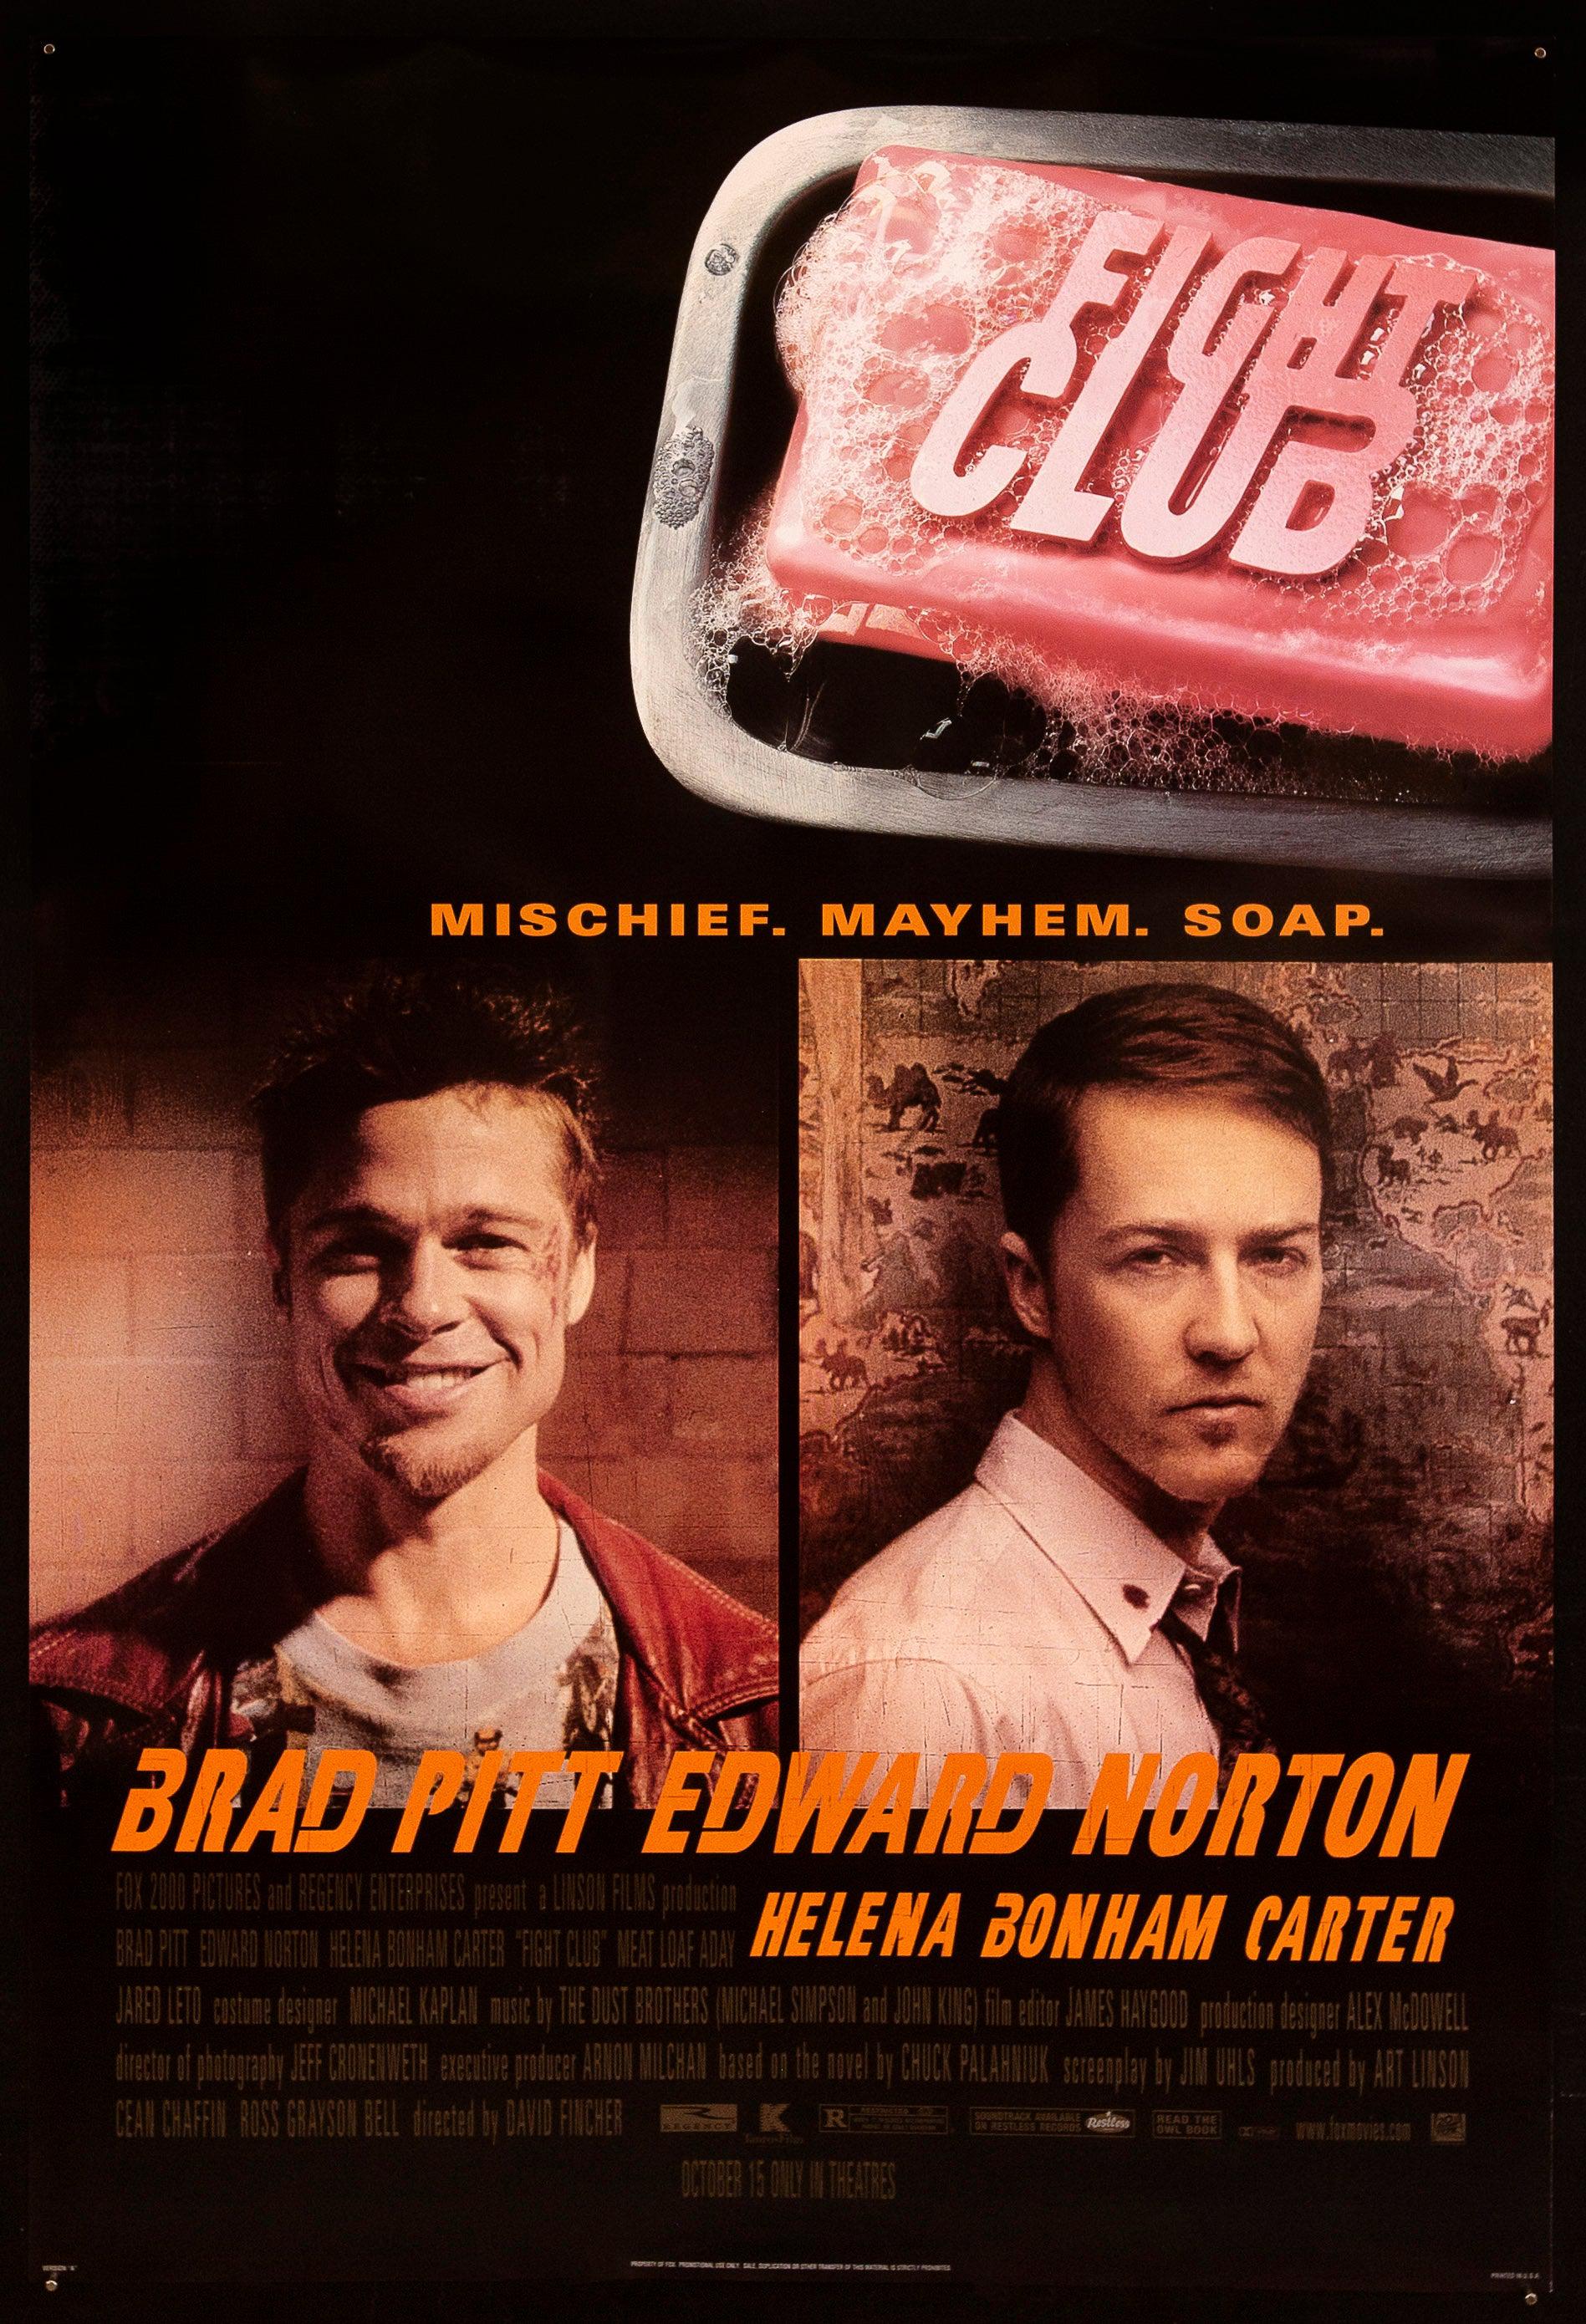 fight club original poster